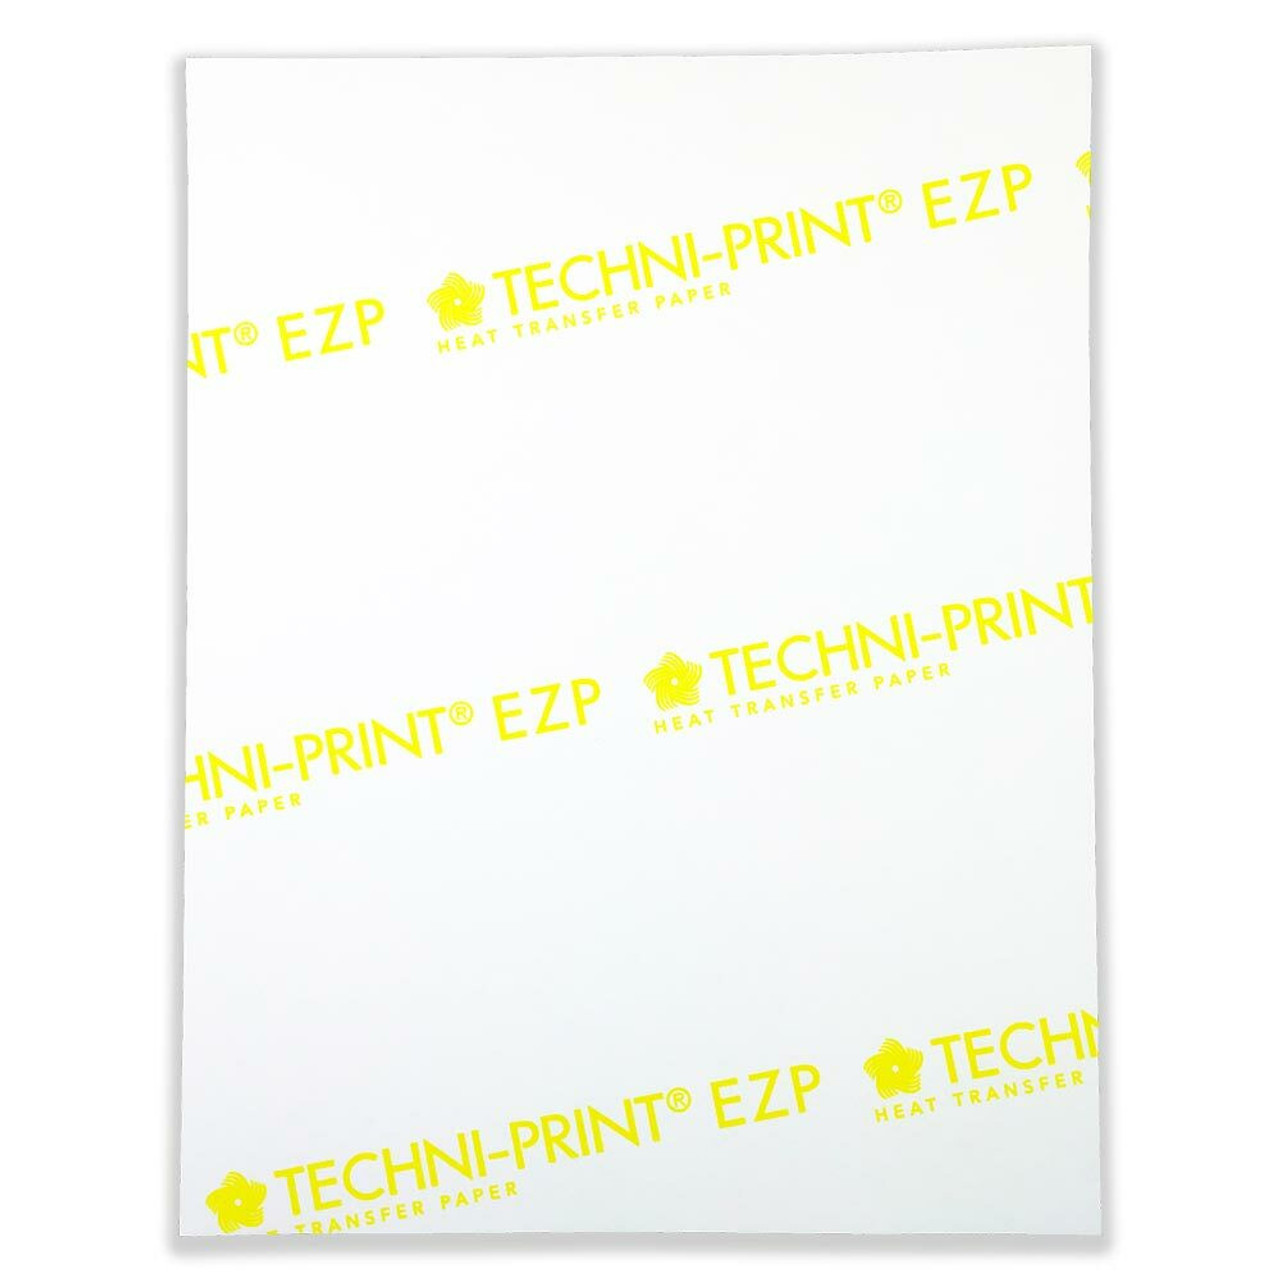 TECHNI-PRINT® EZP Laser Transfer Paper - 8.5 x 11